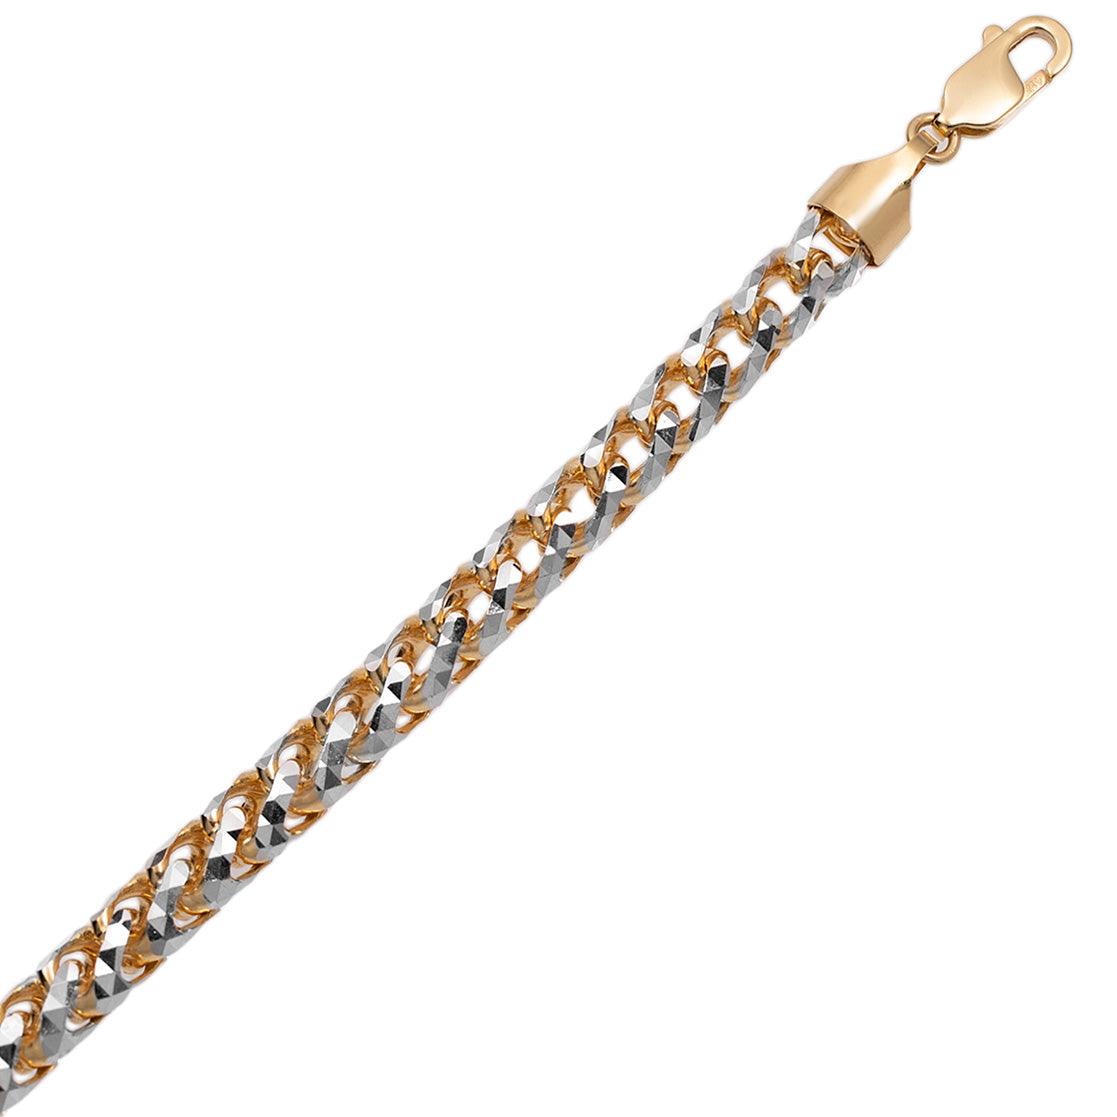 Pave Round Franco Chain Bracelet 10K Yellow White Gold - bayamjewelry